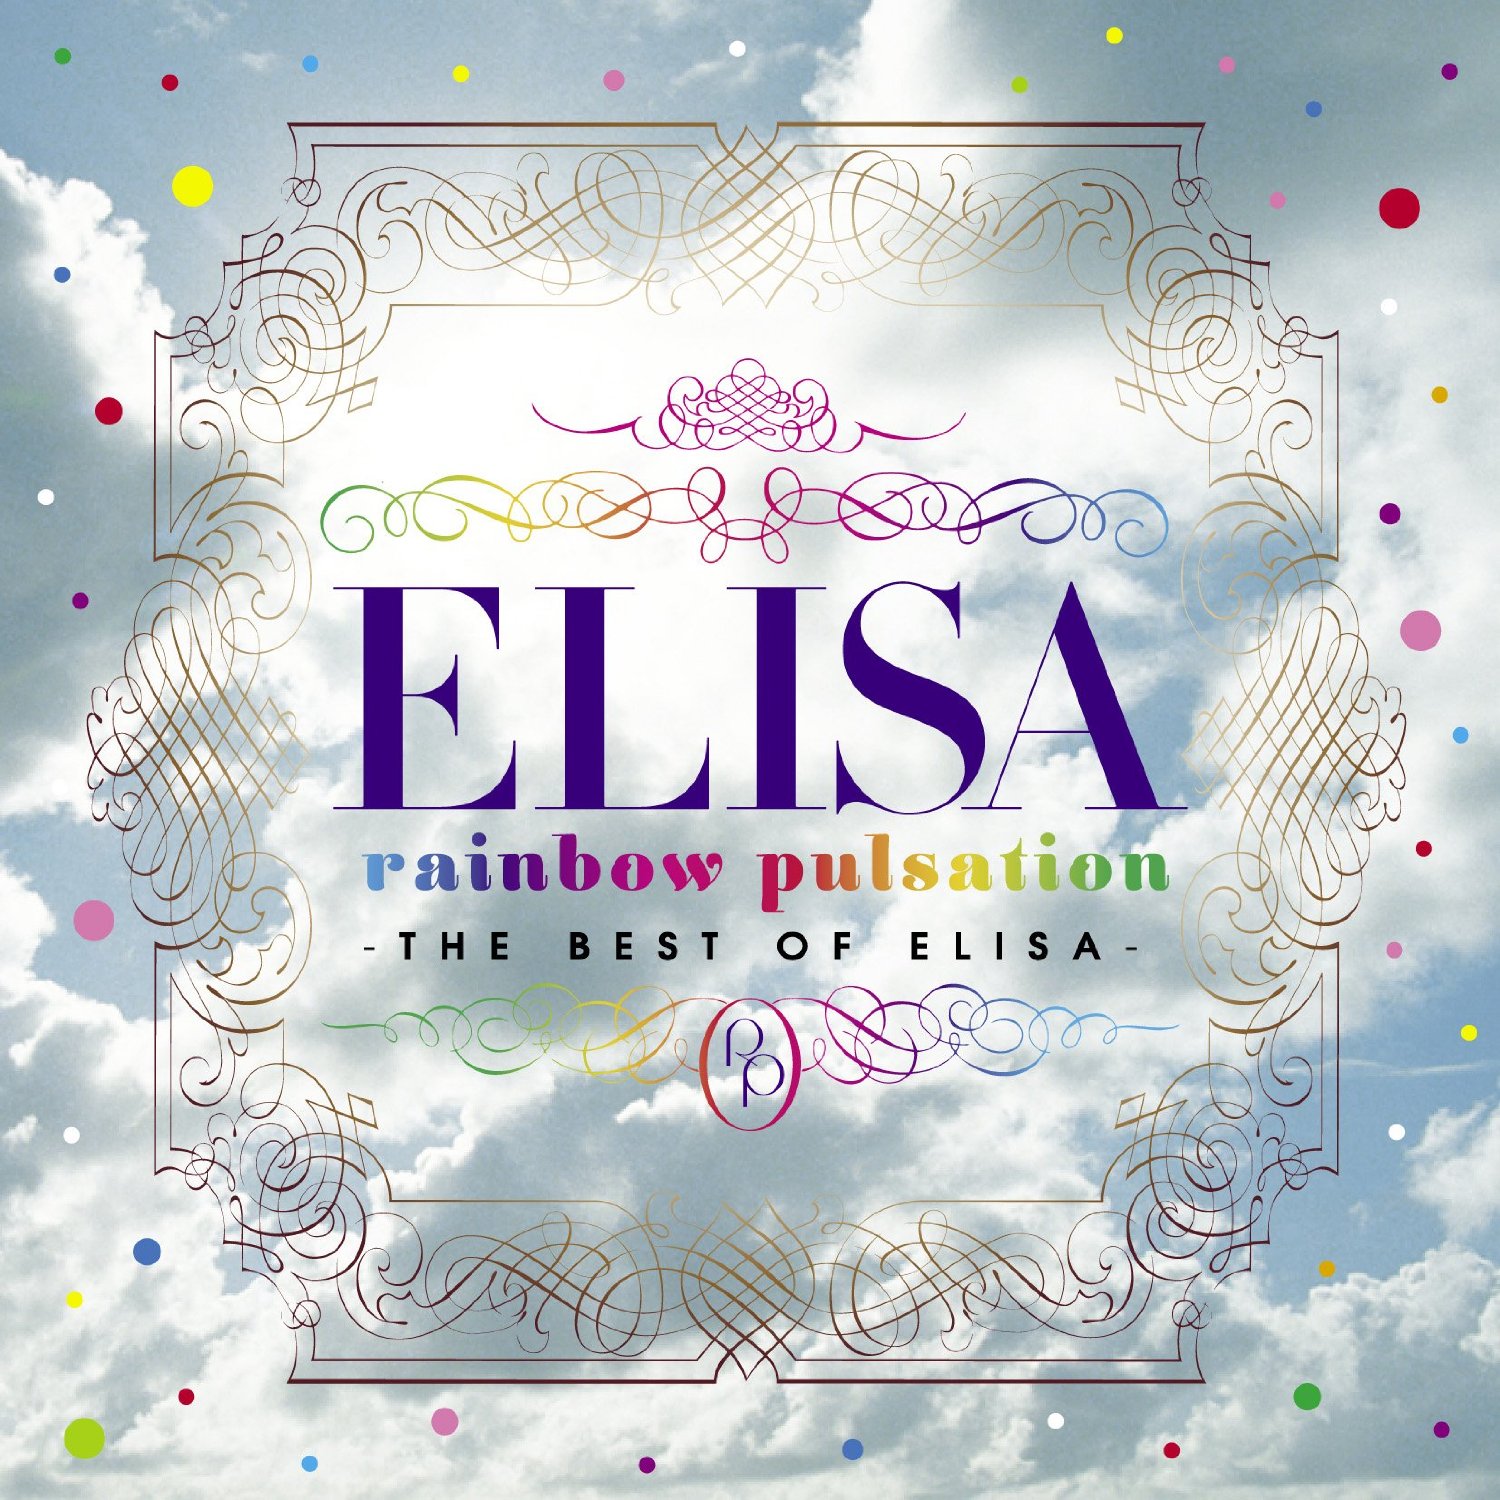 ELISA - Special “ONE”